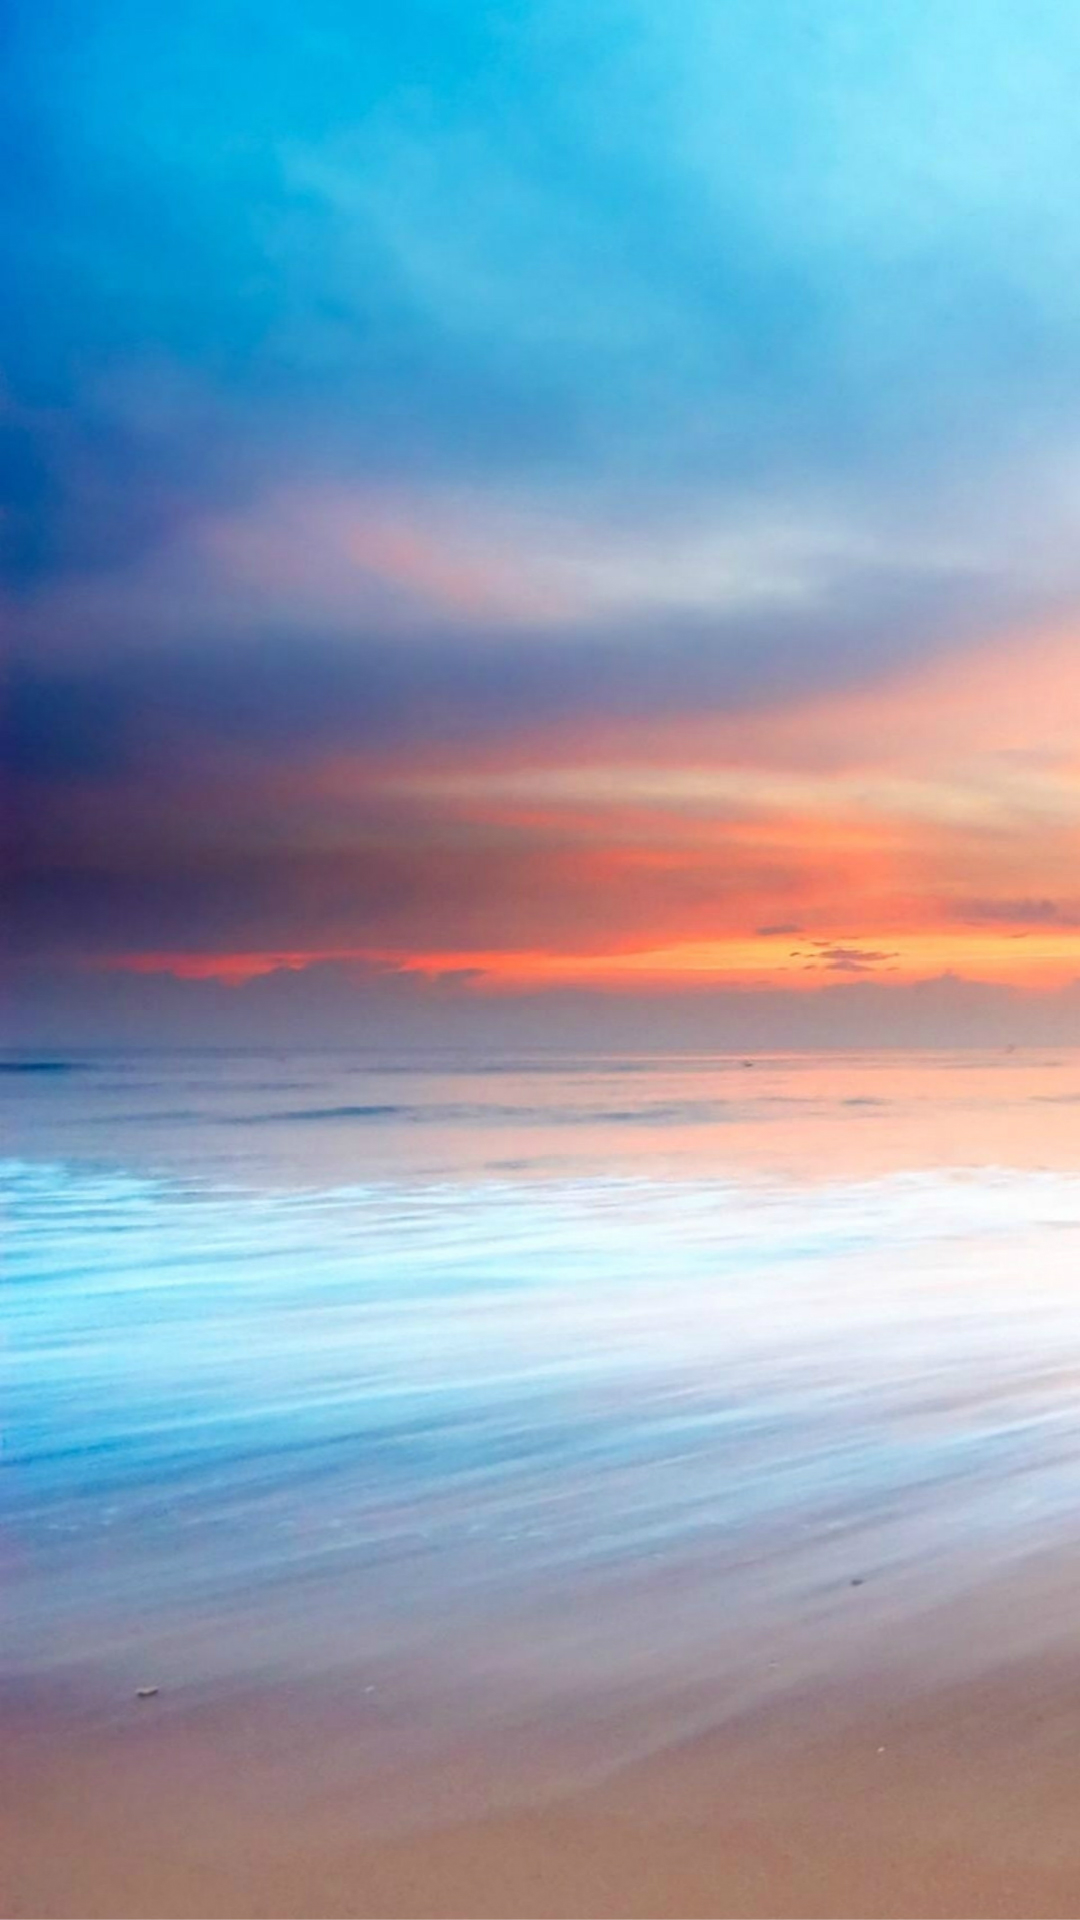 Nature-Ocean-Beach-Sunset-Bokeh-Sky-View-iPhone-6-wallpaper.